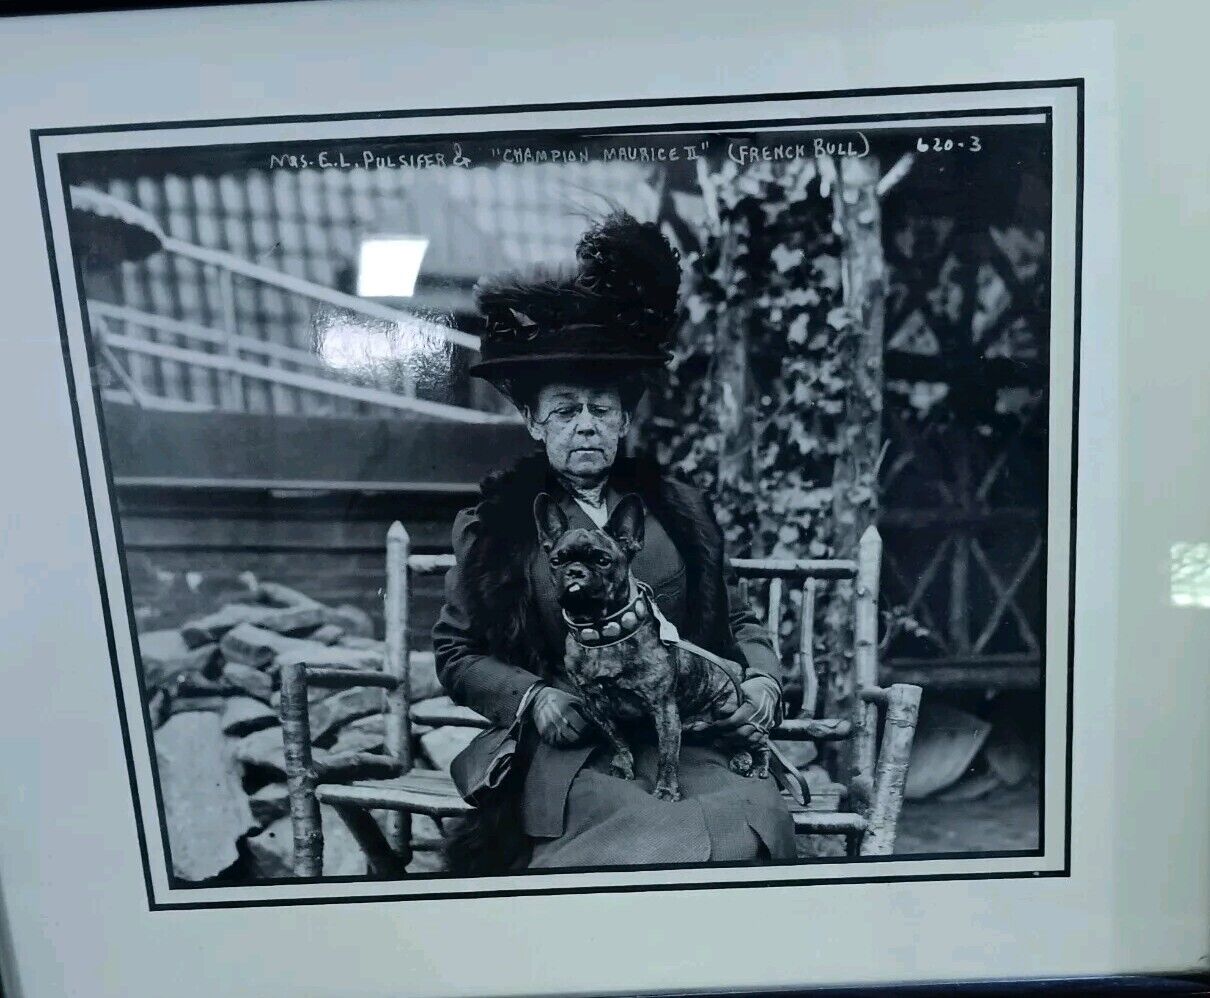 Victorian Woman with Champion Frenchie Bulldog Maurice III